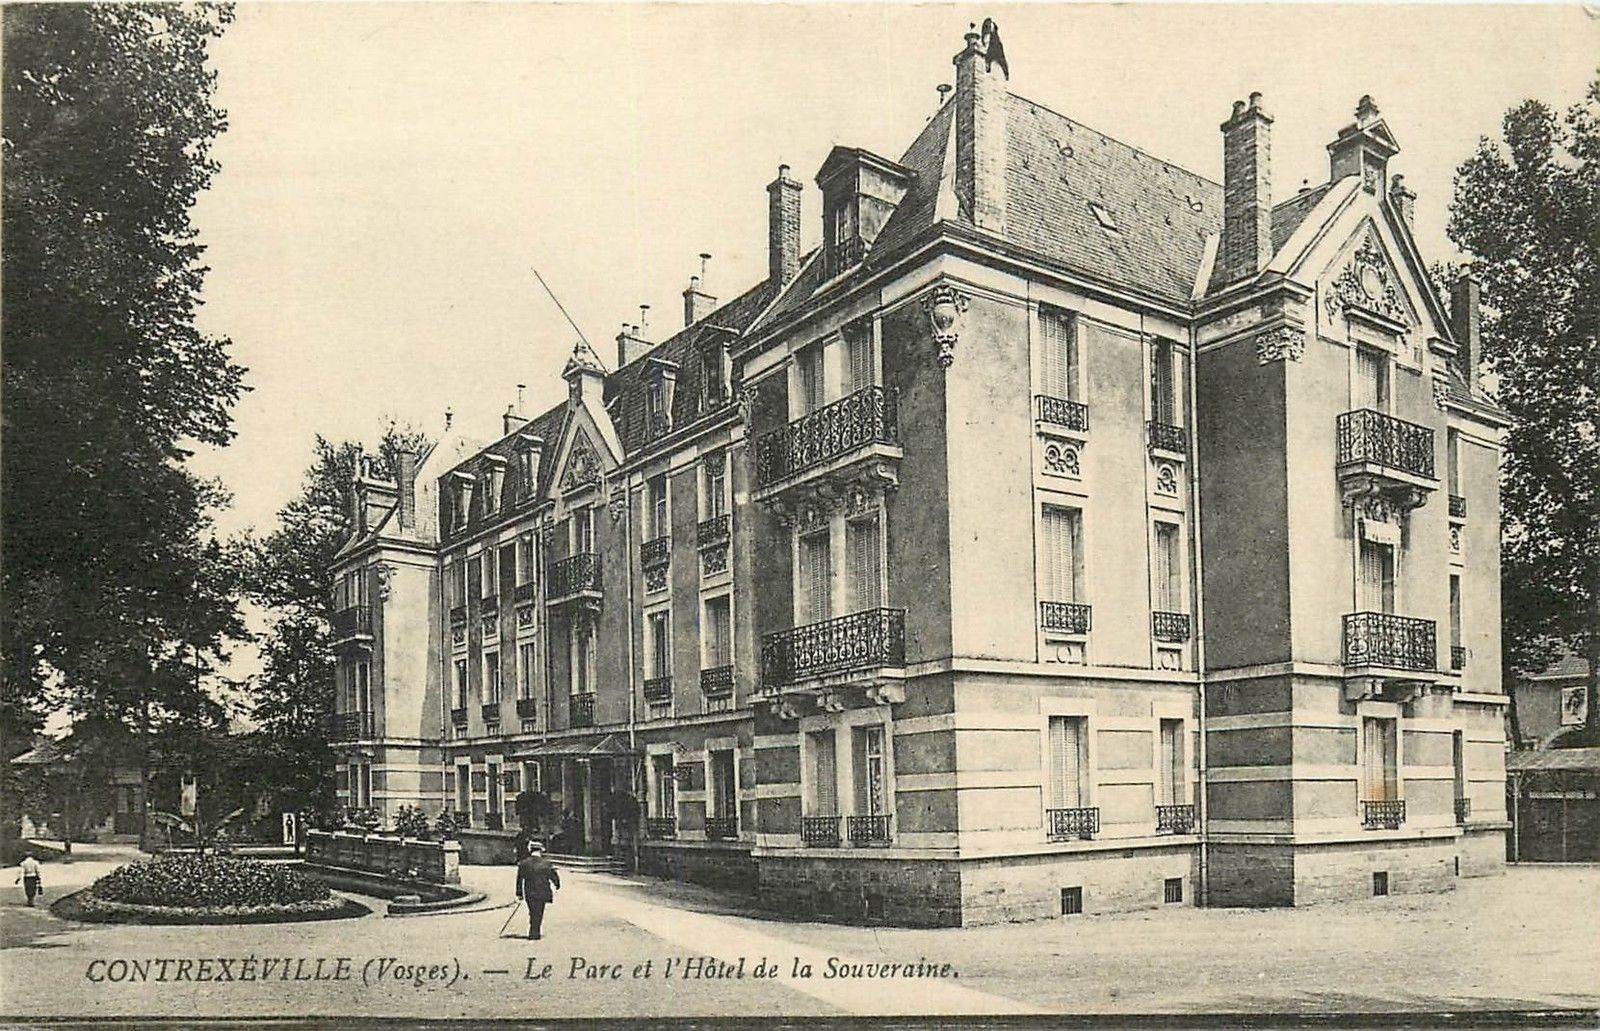 Postcard image, Hotel La Souveraine, Contrexeville, France